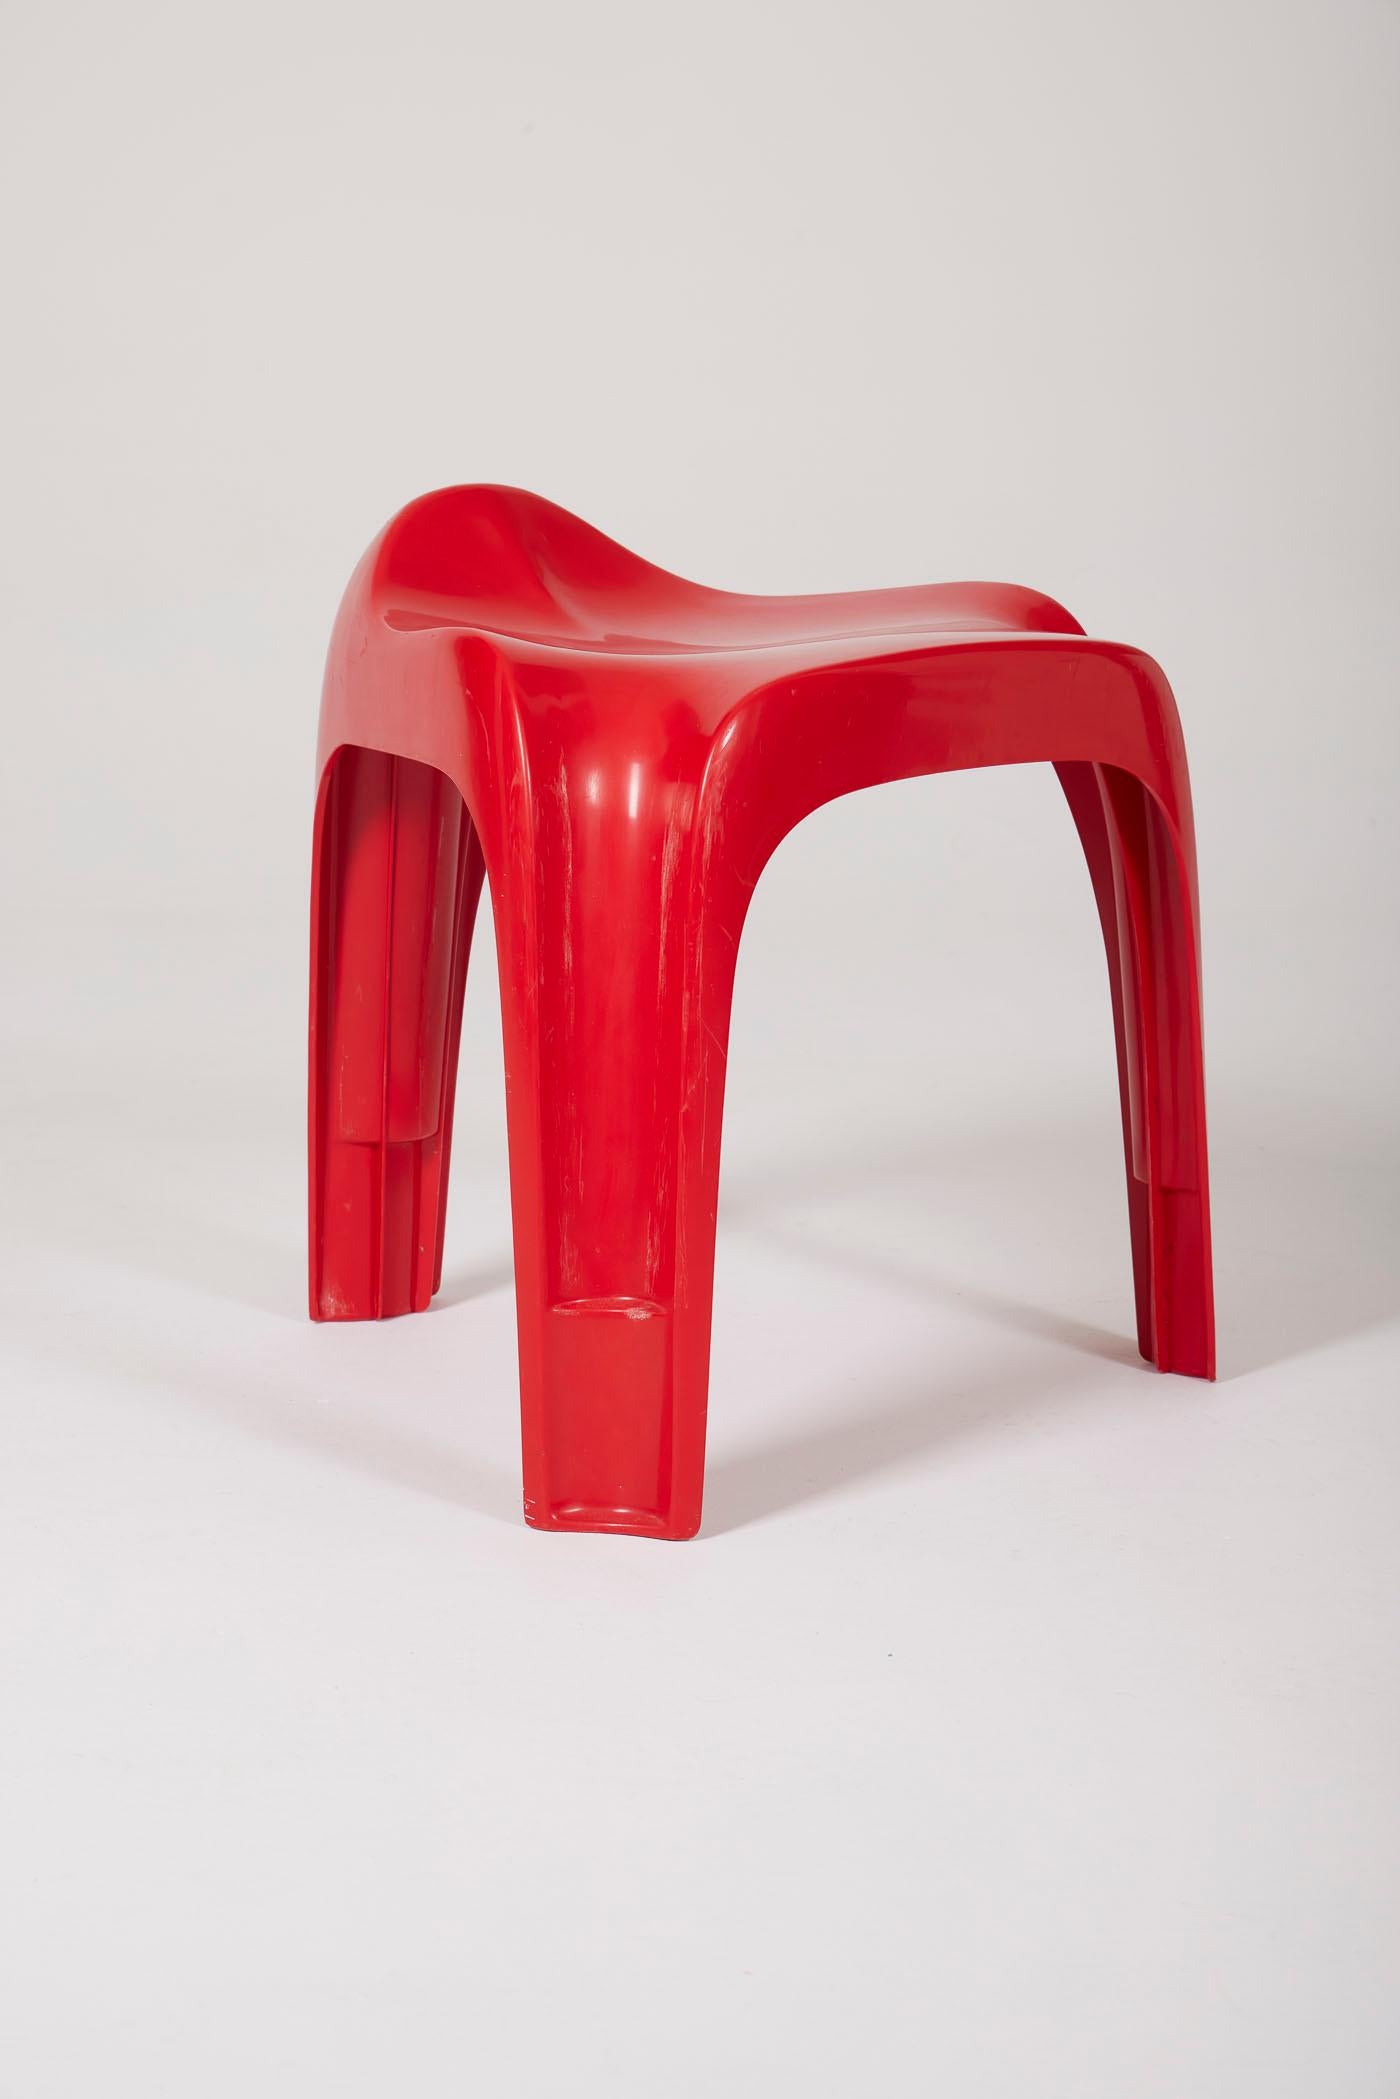 Alexander Begge stool For Sale 1